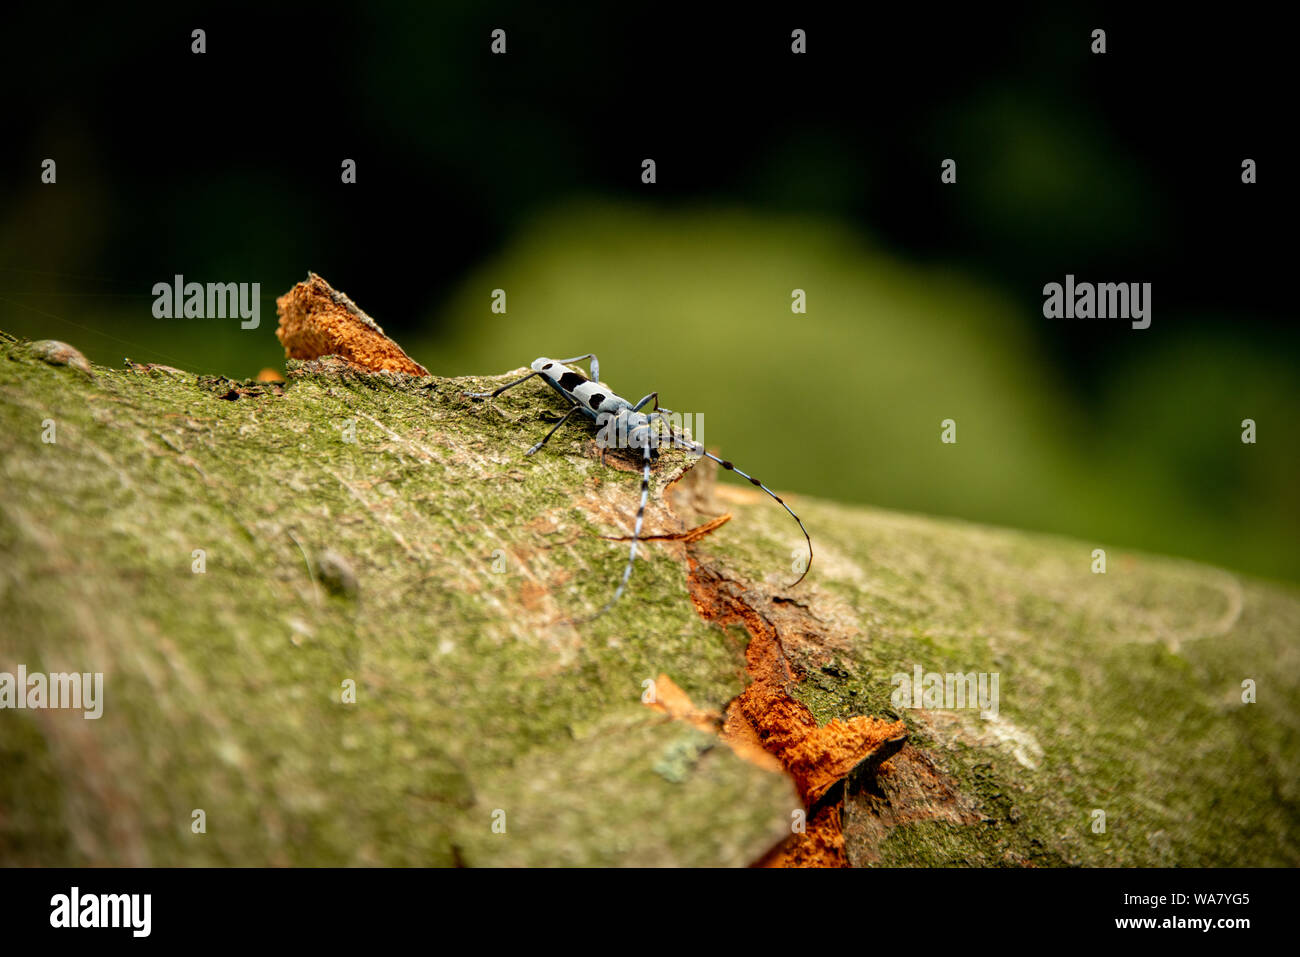 Rosalia longicorn (Rosalia alpina) or Alpine longhorn beetle in natural habitat. Beautiful blue incest with long feelers, in the nature green forest Stock Photo